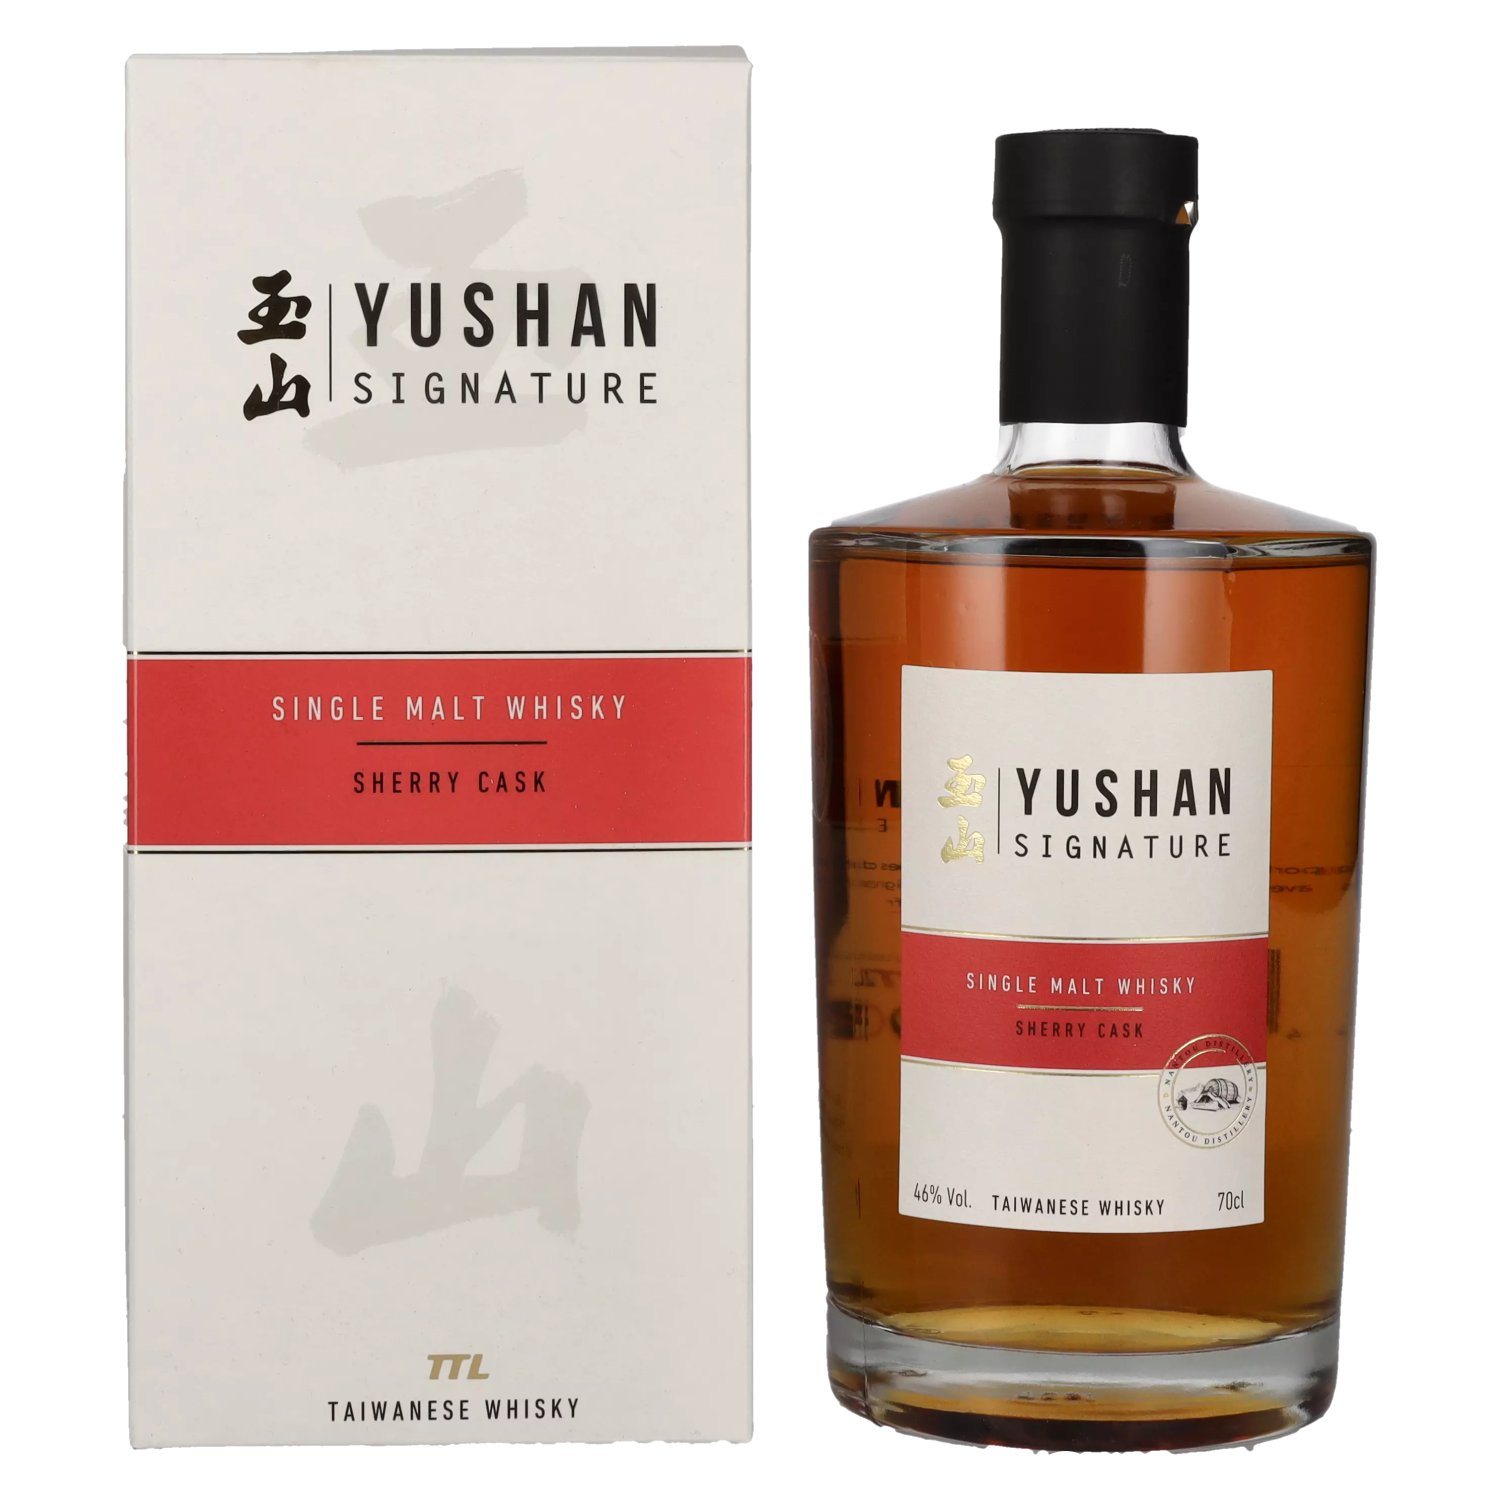 Yushan Signature Single Malt Whisky in 0,7l 46% Giftbox Vol. CASK SHERRY